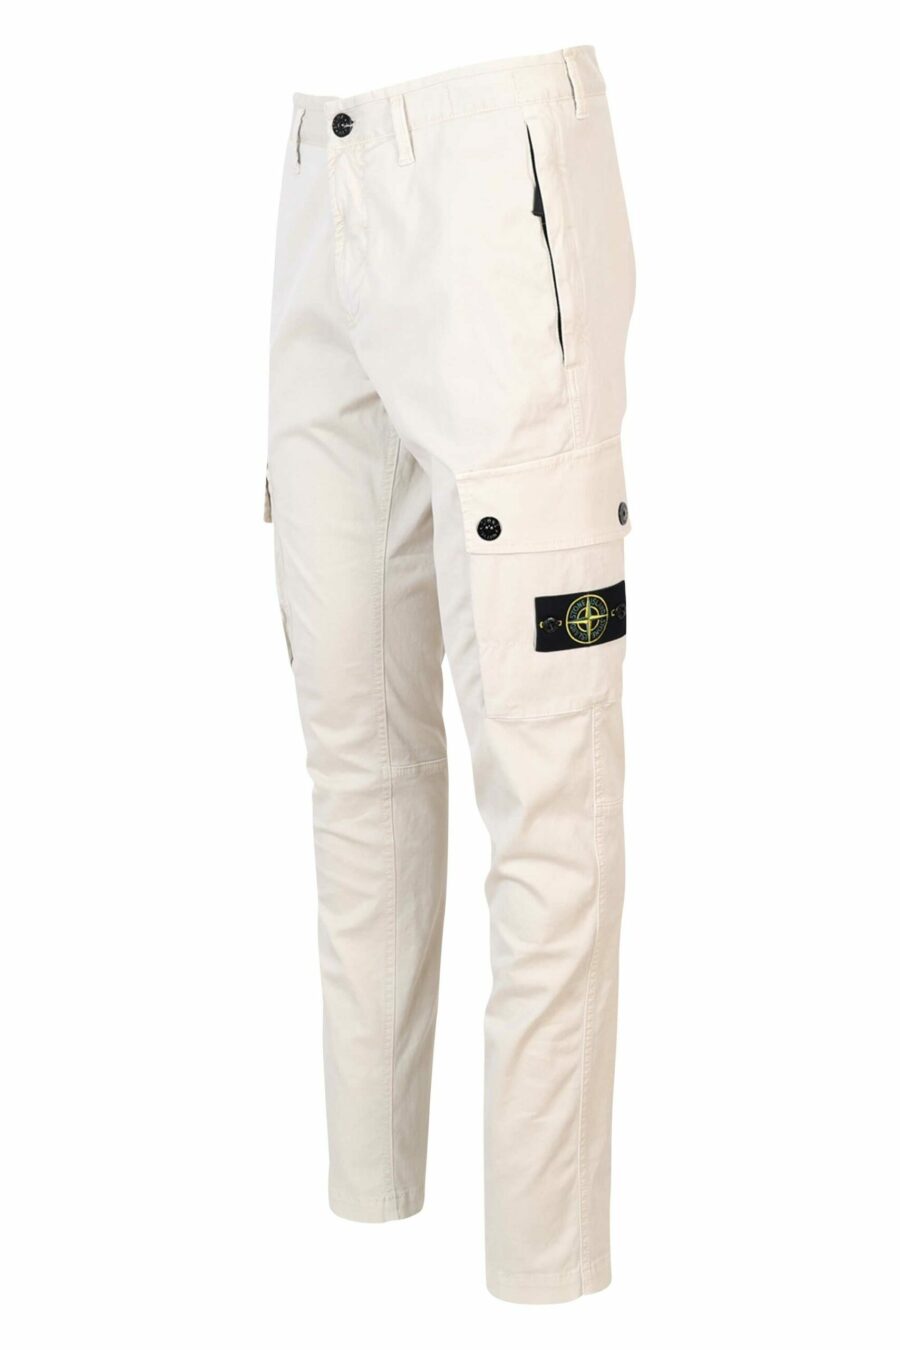 Pantalón beige "slim" con logo lateral parche - 8052572752537 1 scaled